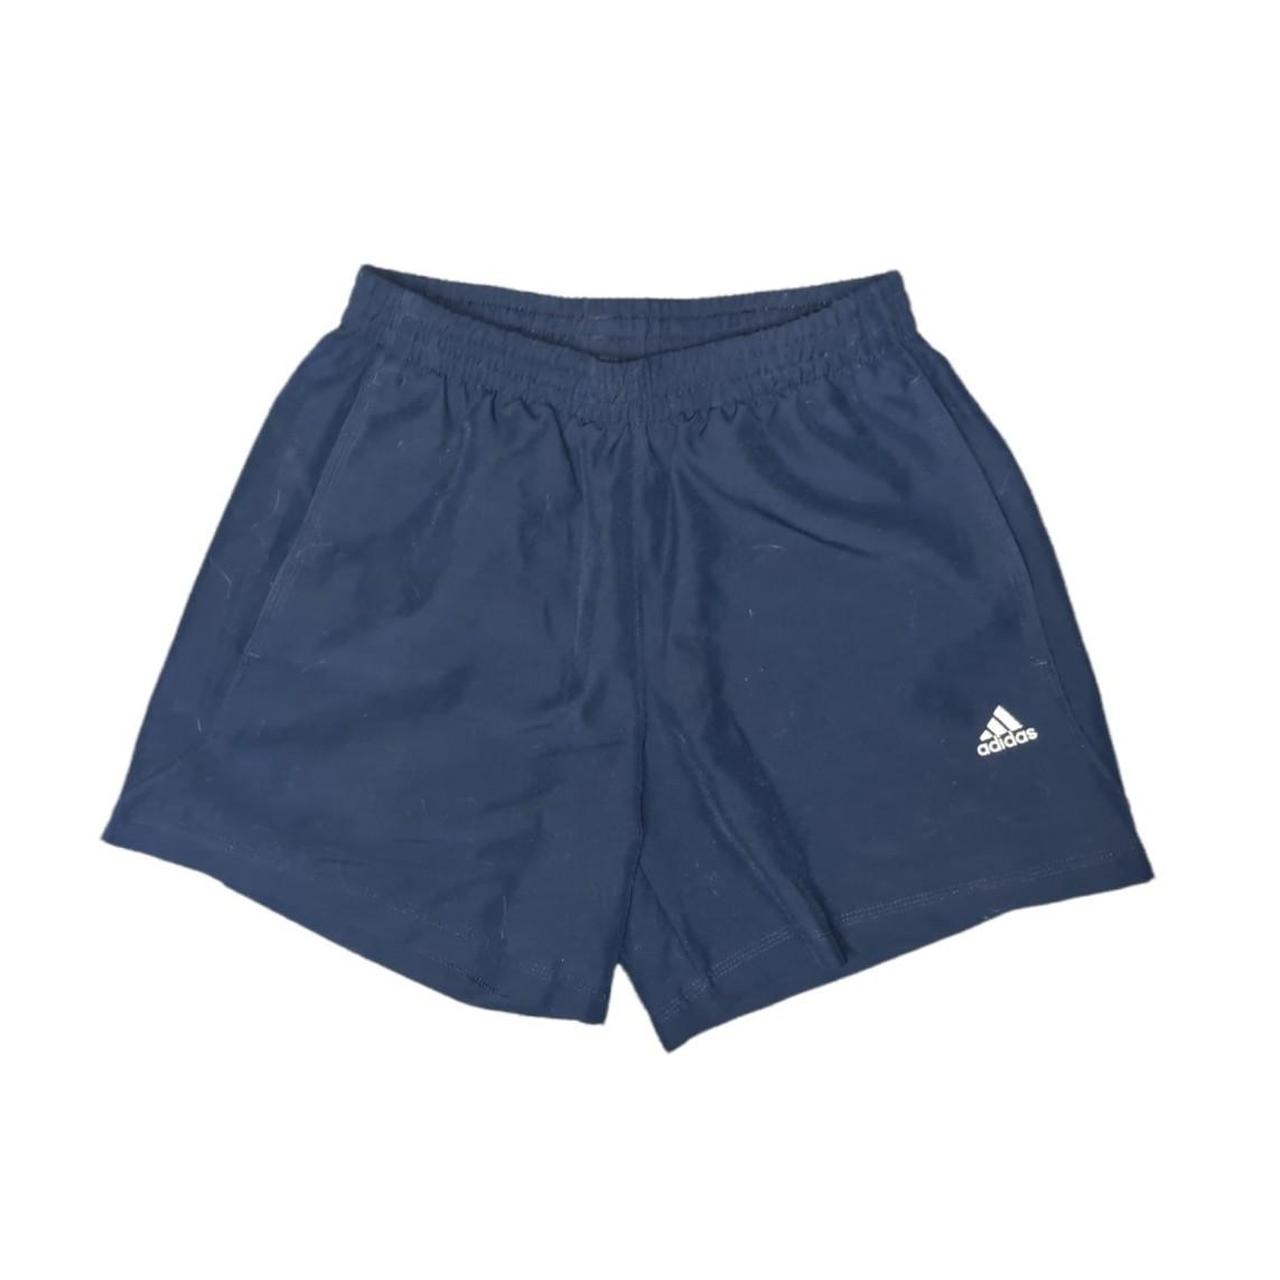 Adidas Men's Navy and White Shorts | Depop